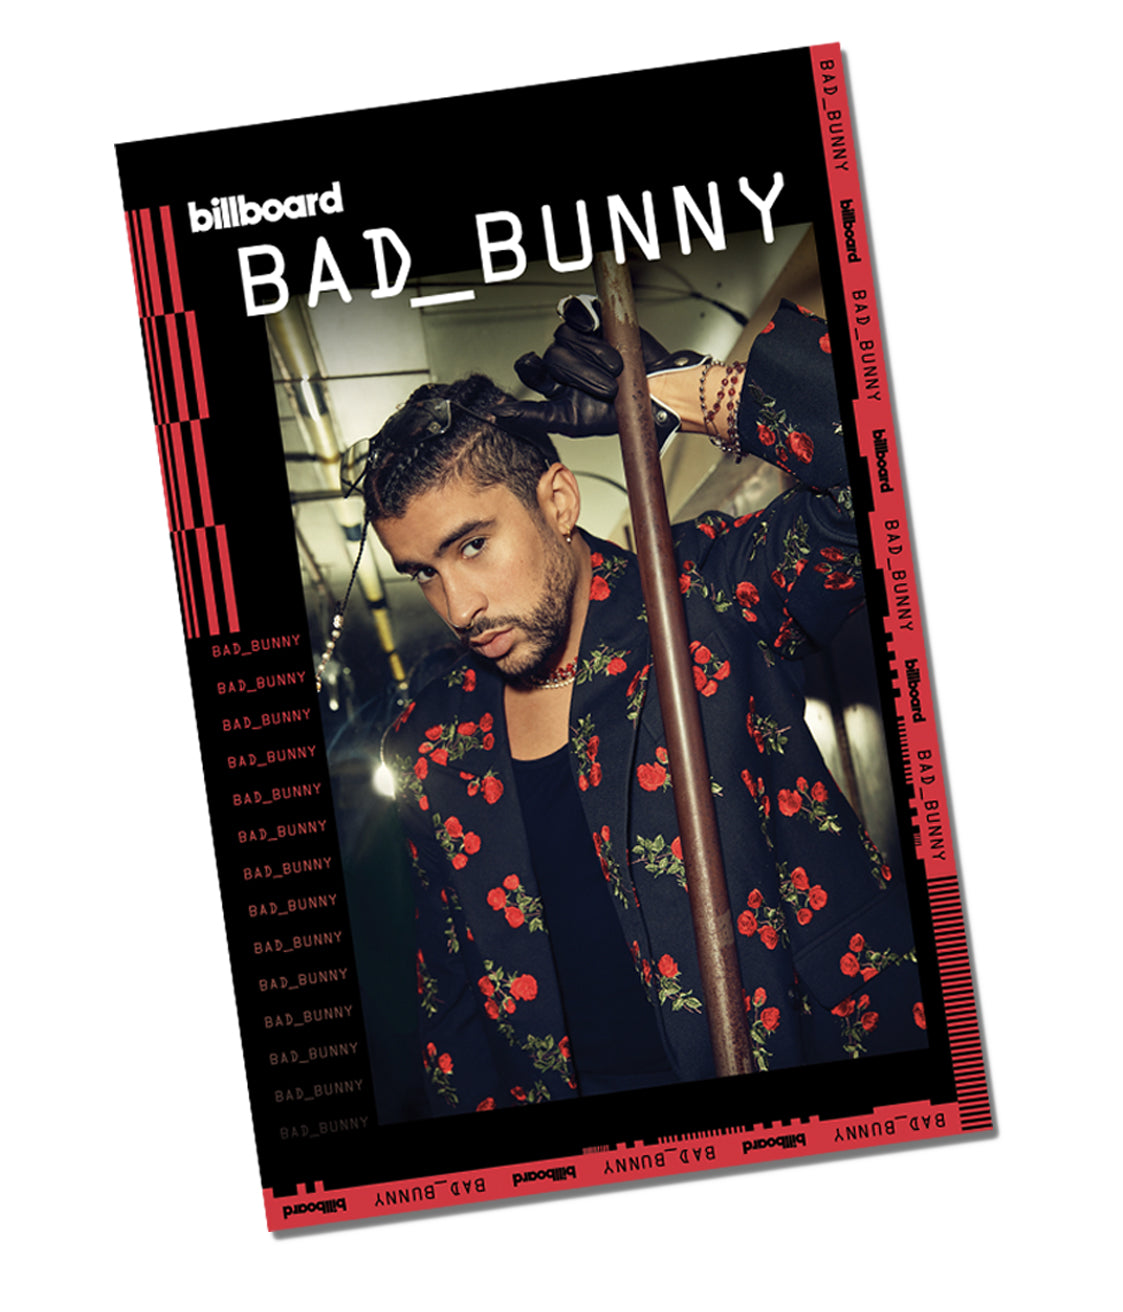 Billboard Collector's Edition Zine Featuring Bad Bunny (Spanish